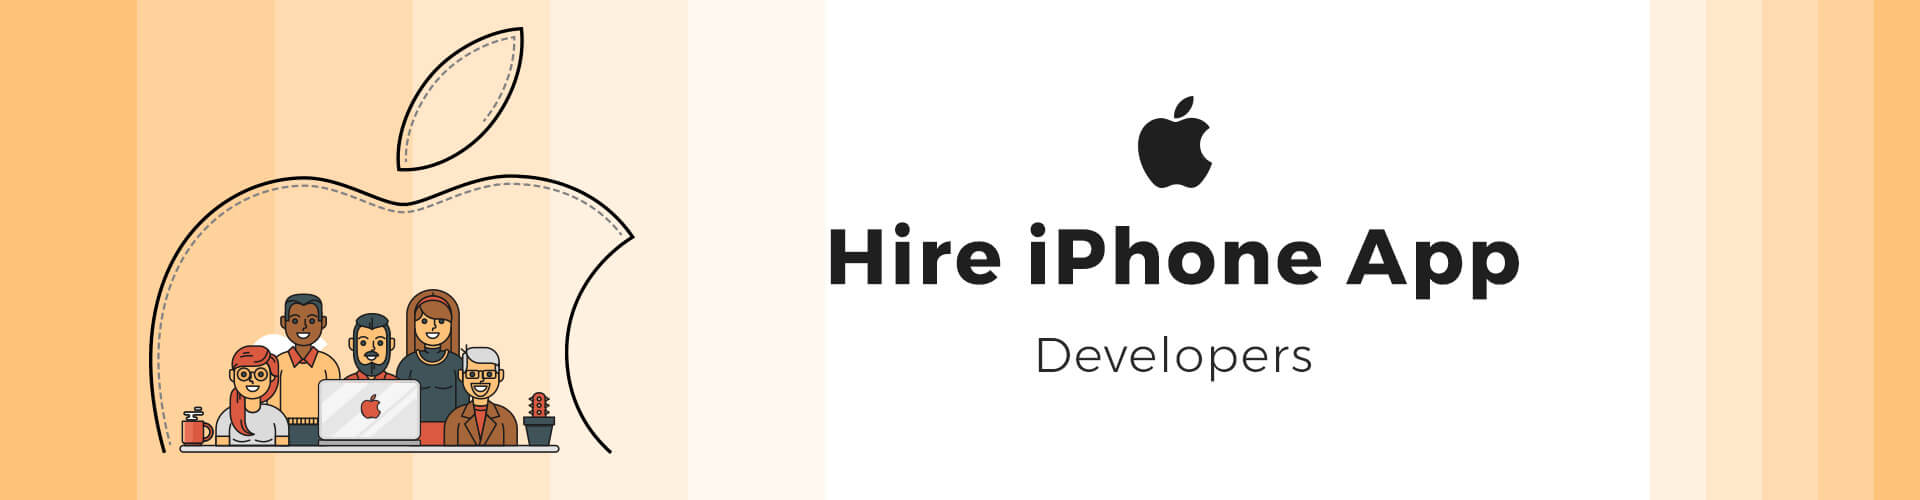 hire iphone app developer 